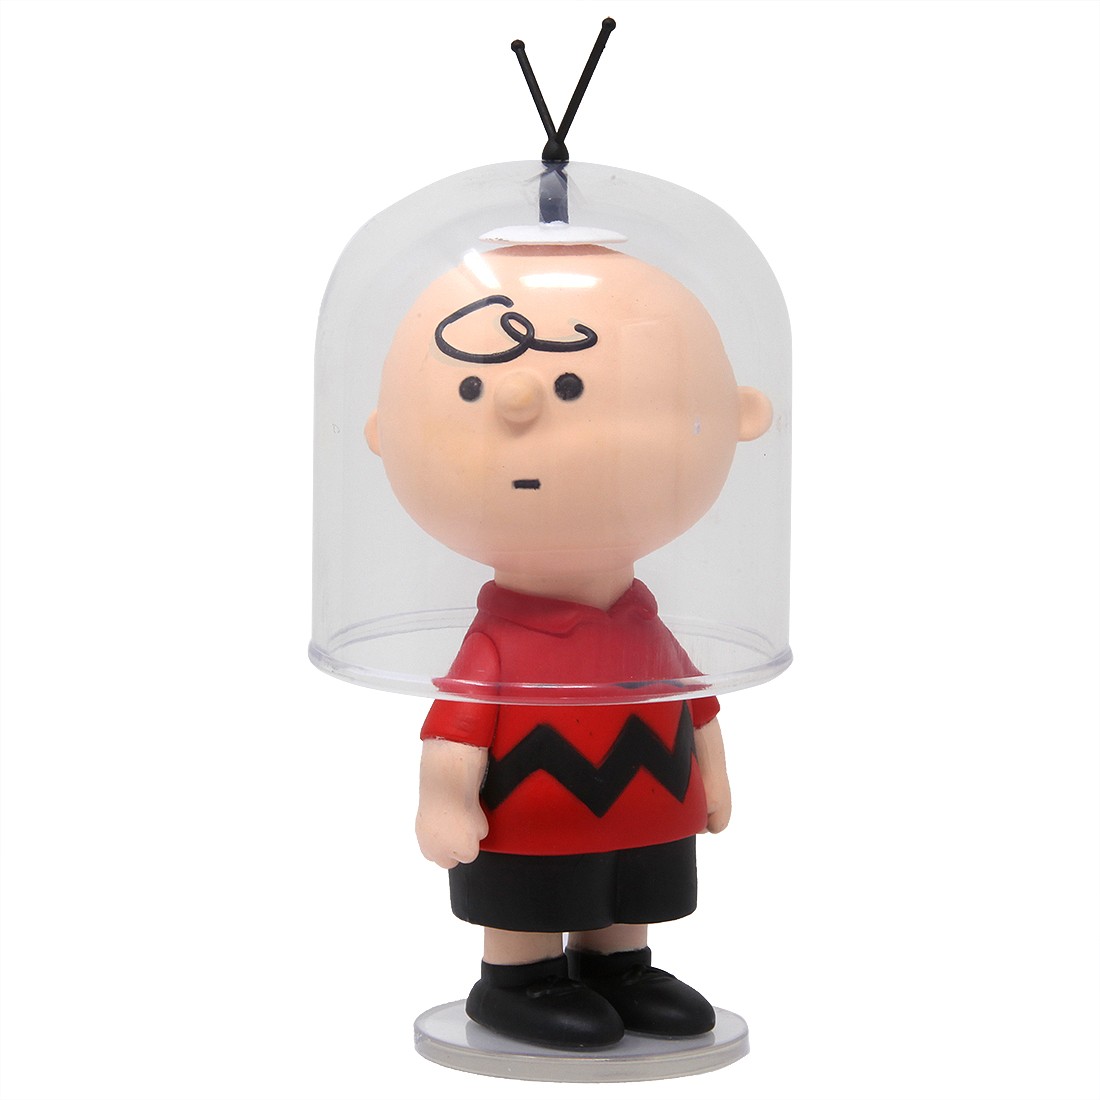 Medicom UDF Peanuts Series 10 Astronaut Charlie Brown Ultra Detail Figure (red)